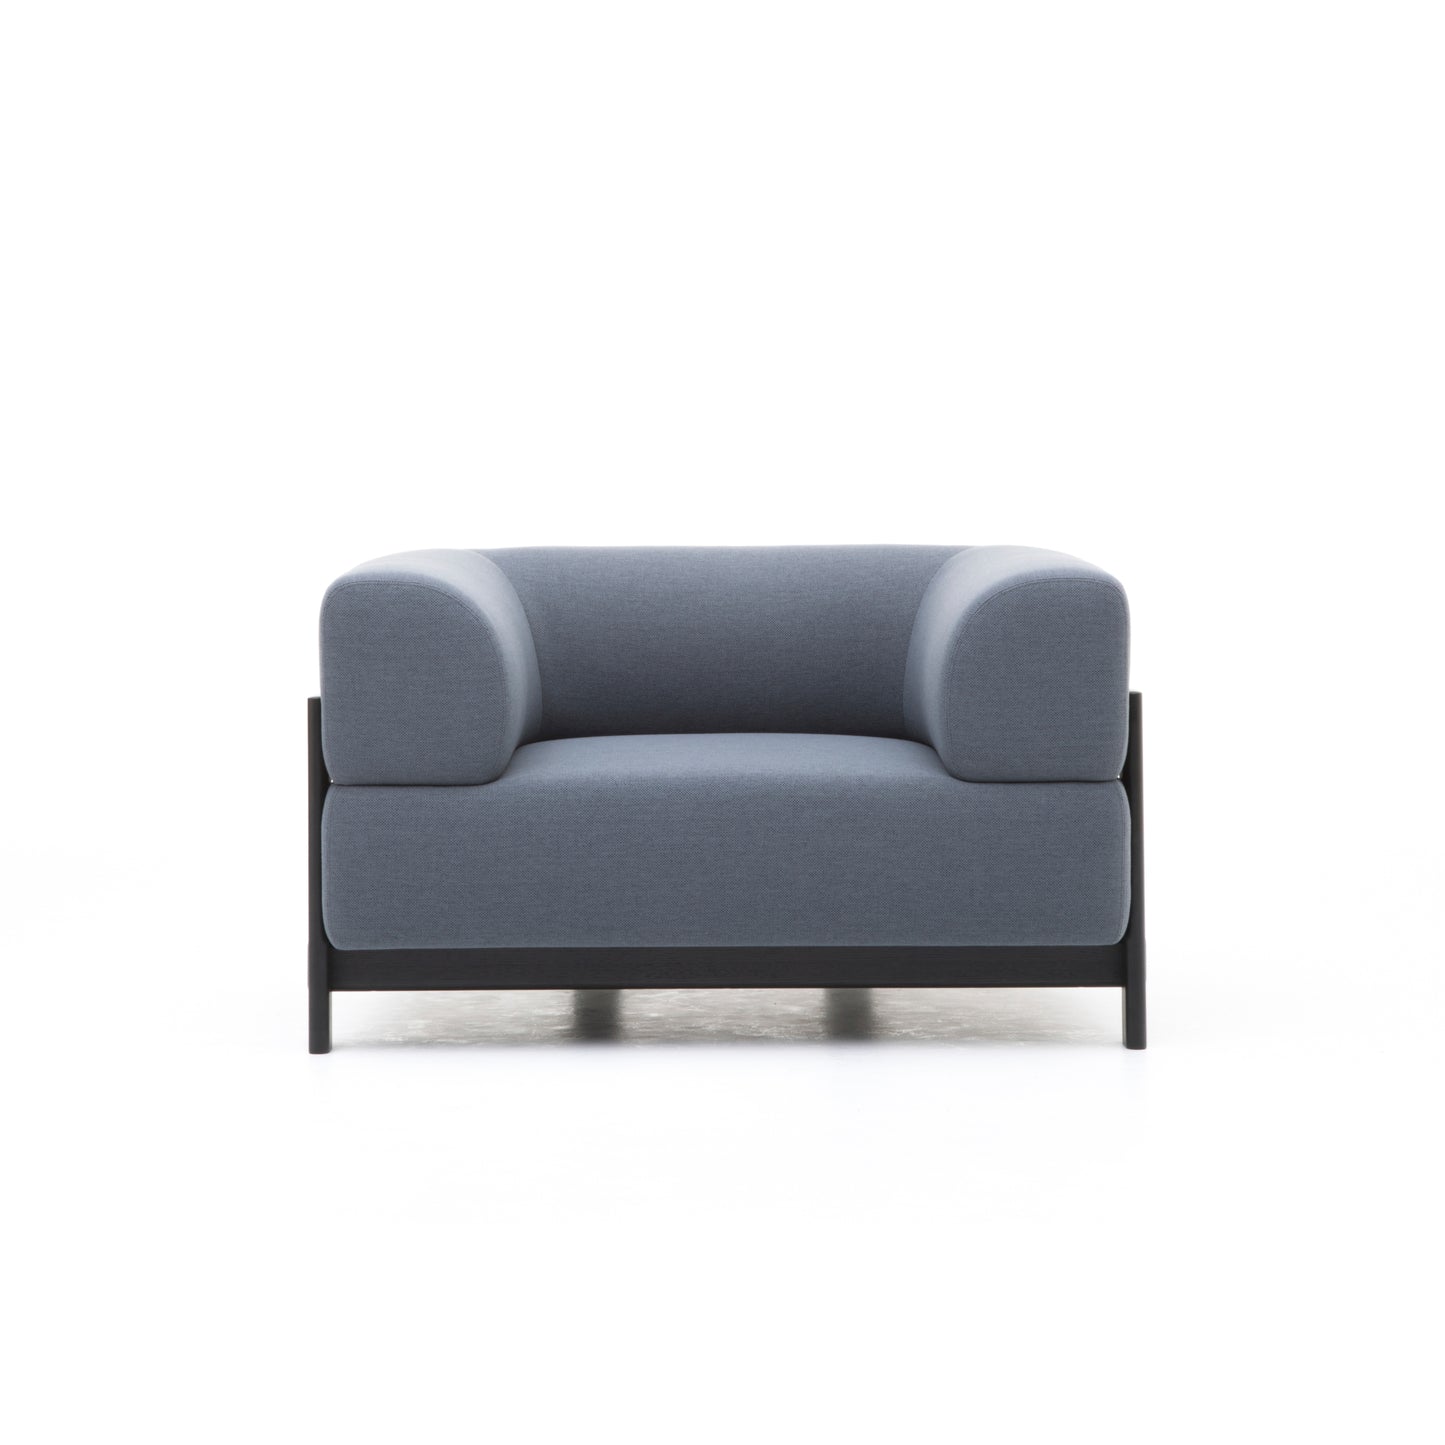 Elephant Sofa 1-Seater | エレファントソファ 1シーター